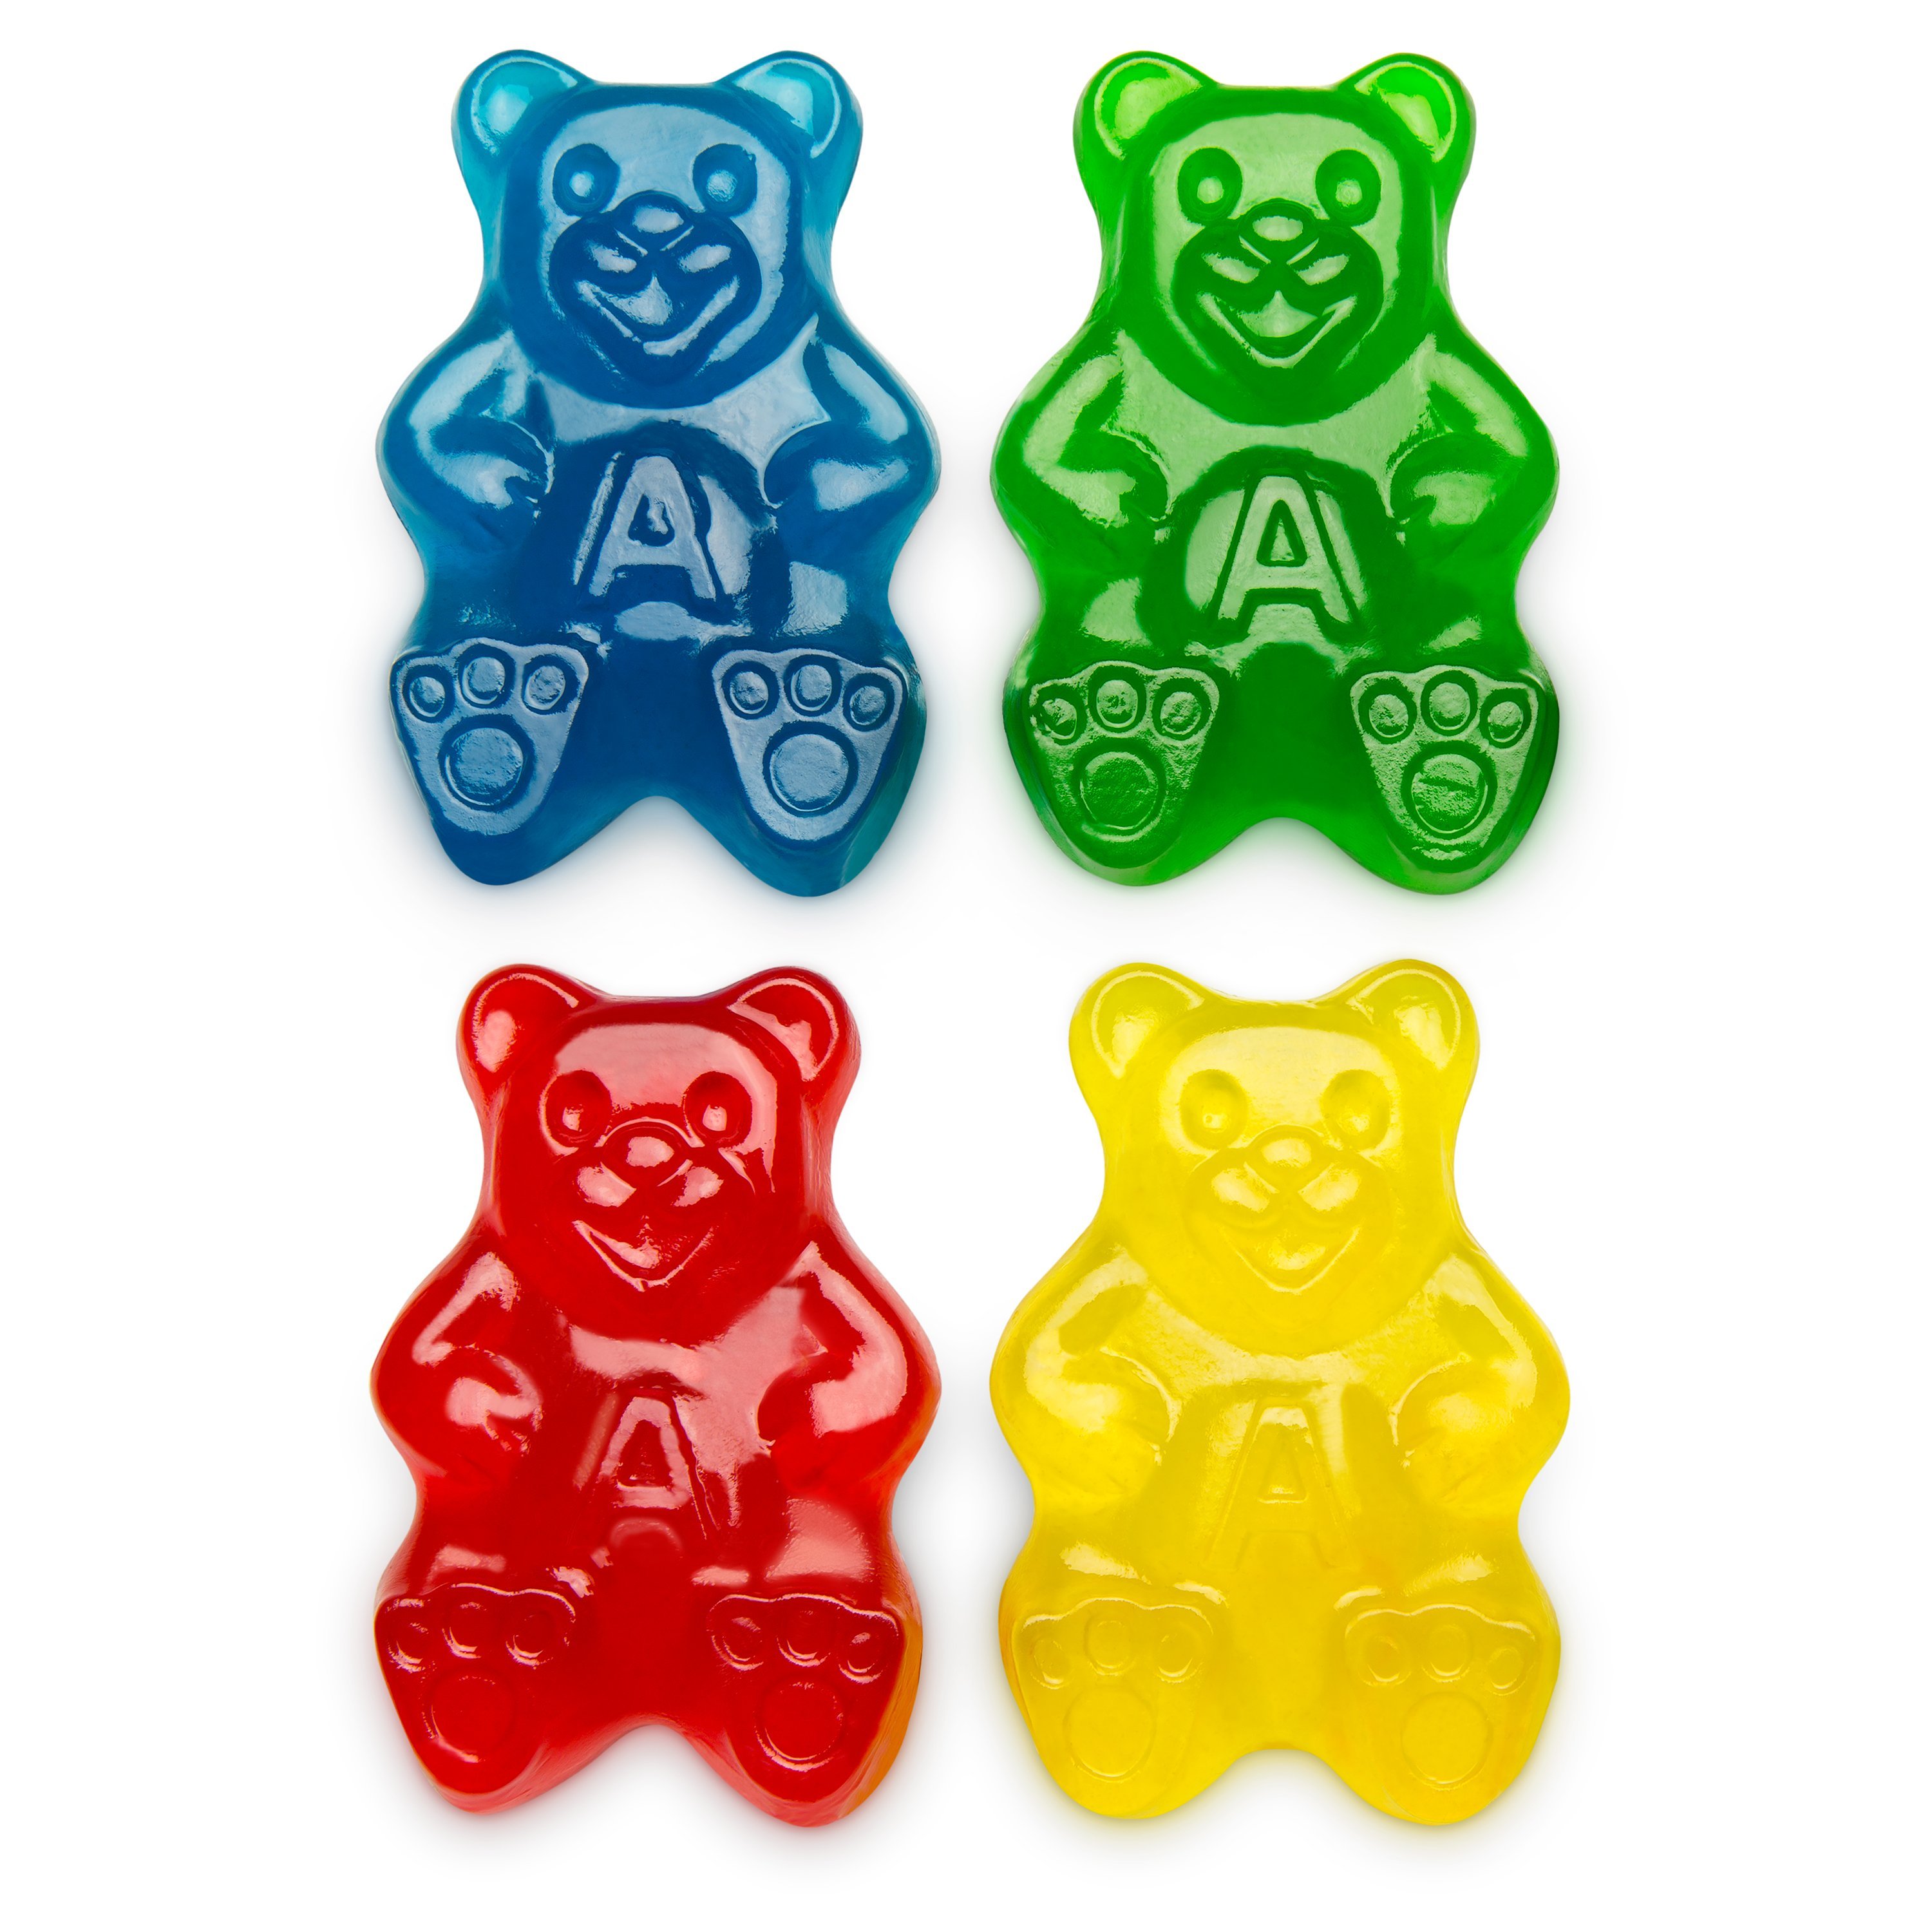 Gummi bears photo